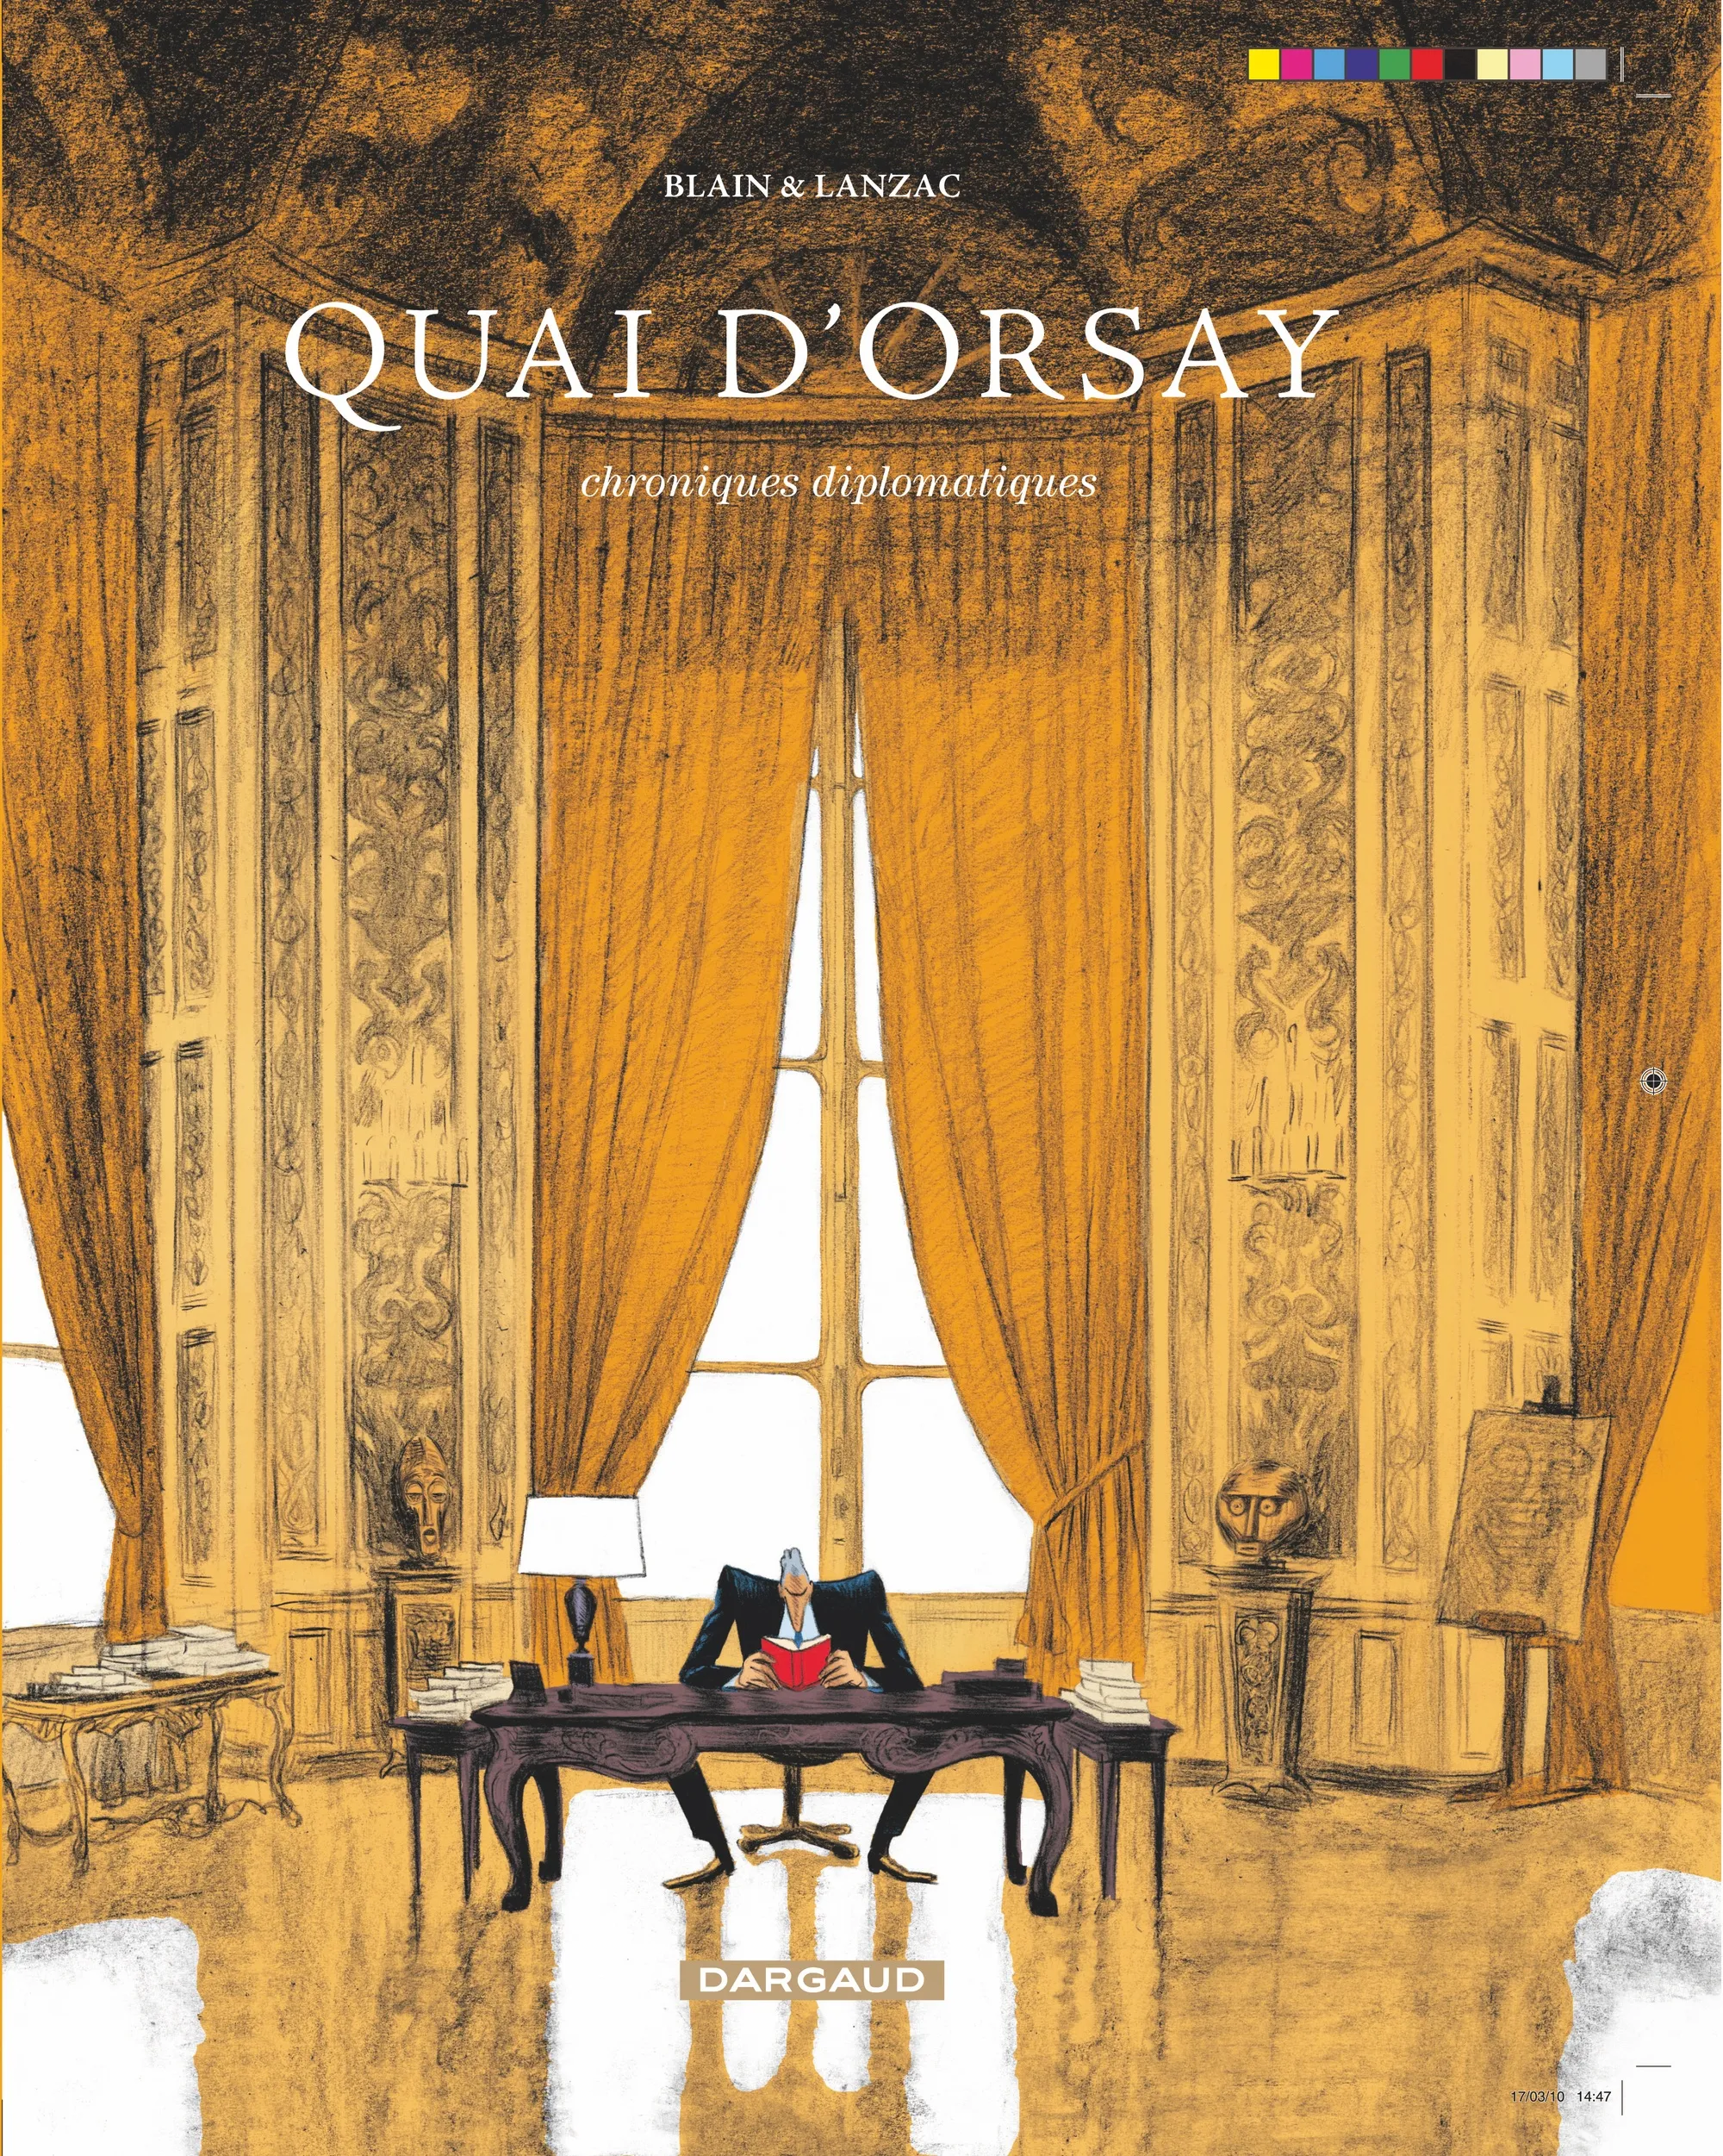 Quai d'Orsay, chroniques diplomatiques